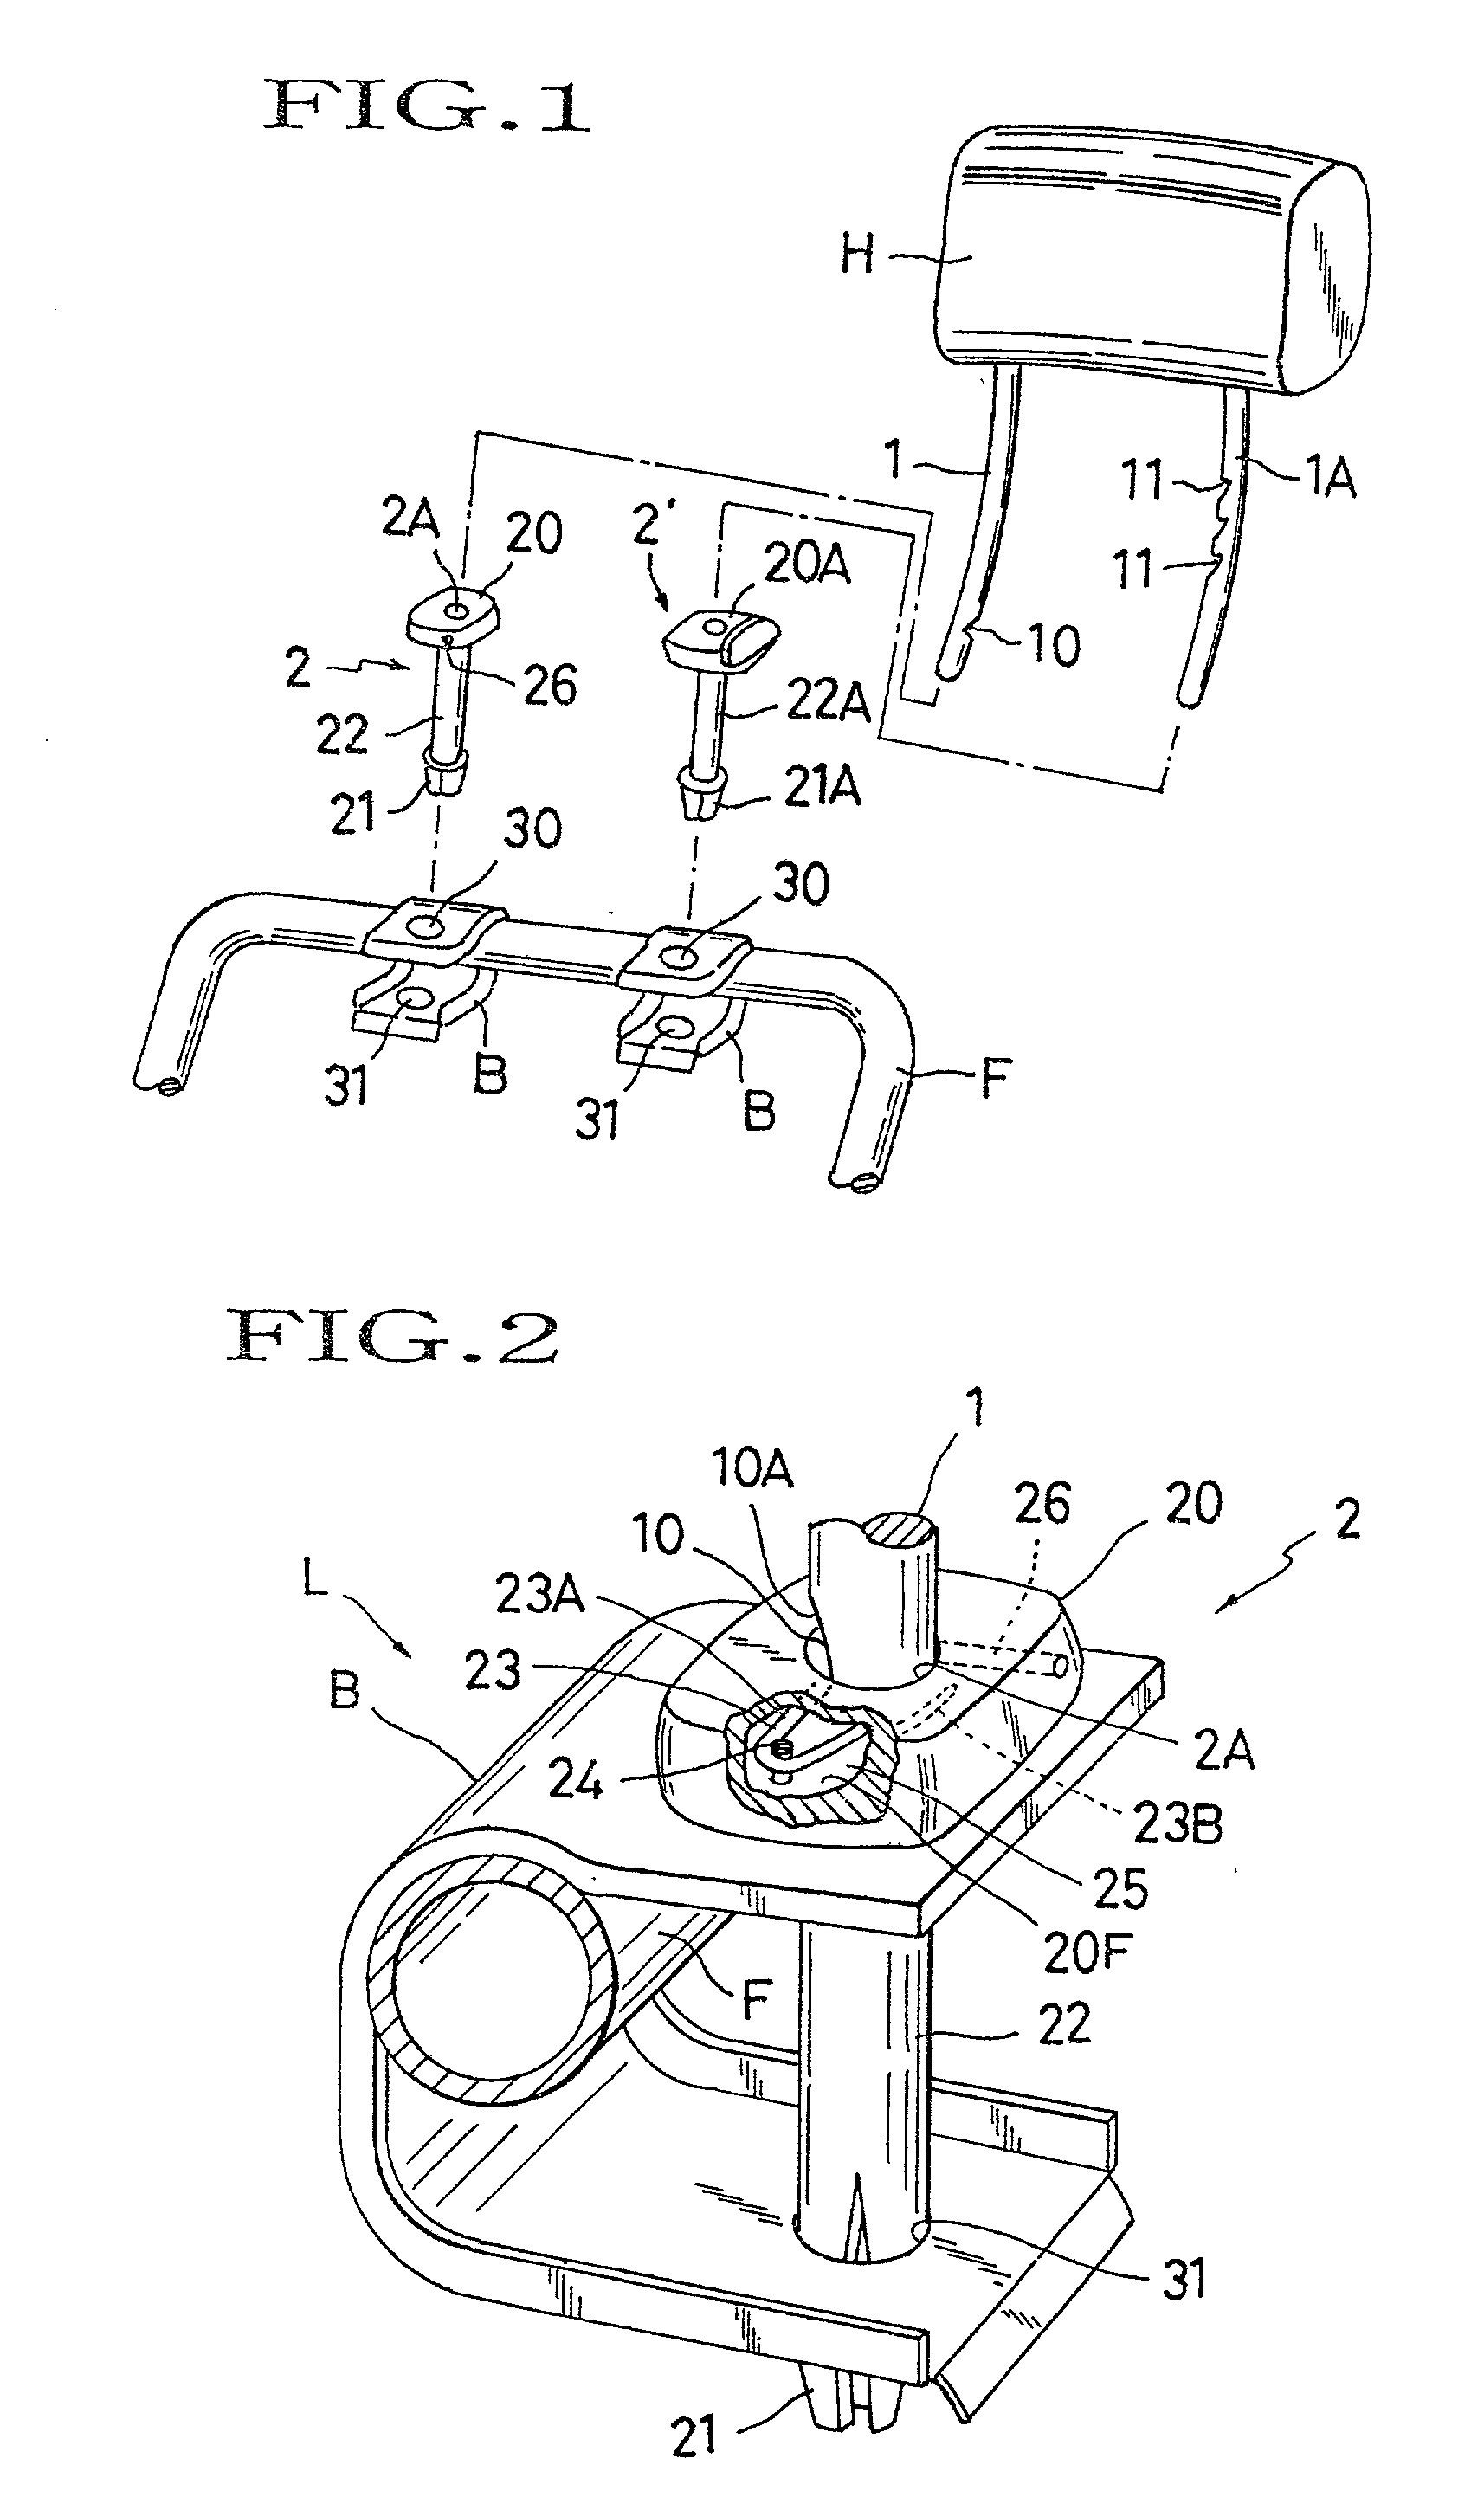 Locking/unlocking mechanism for headrest